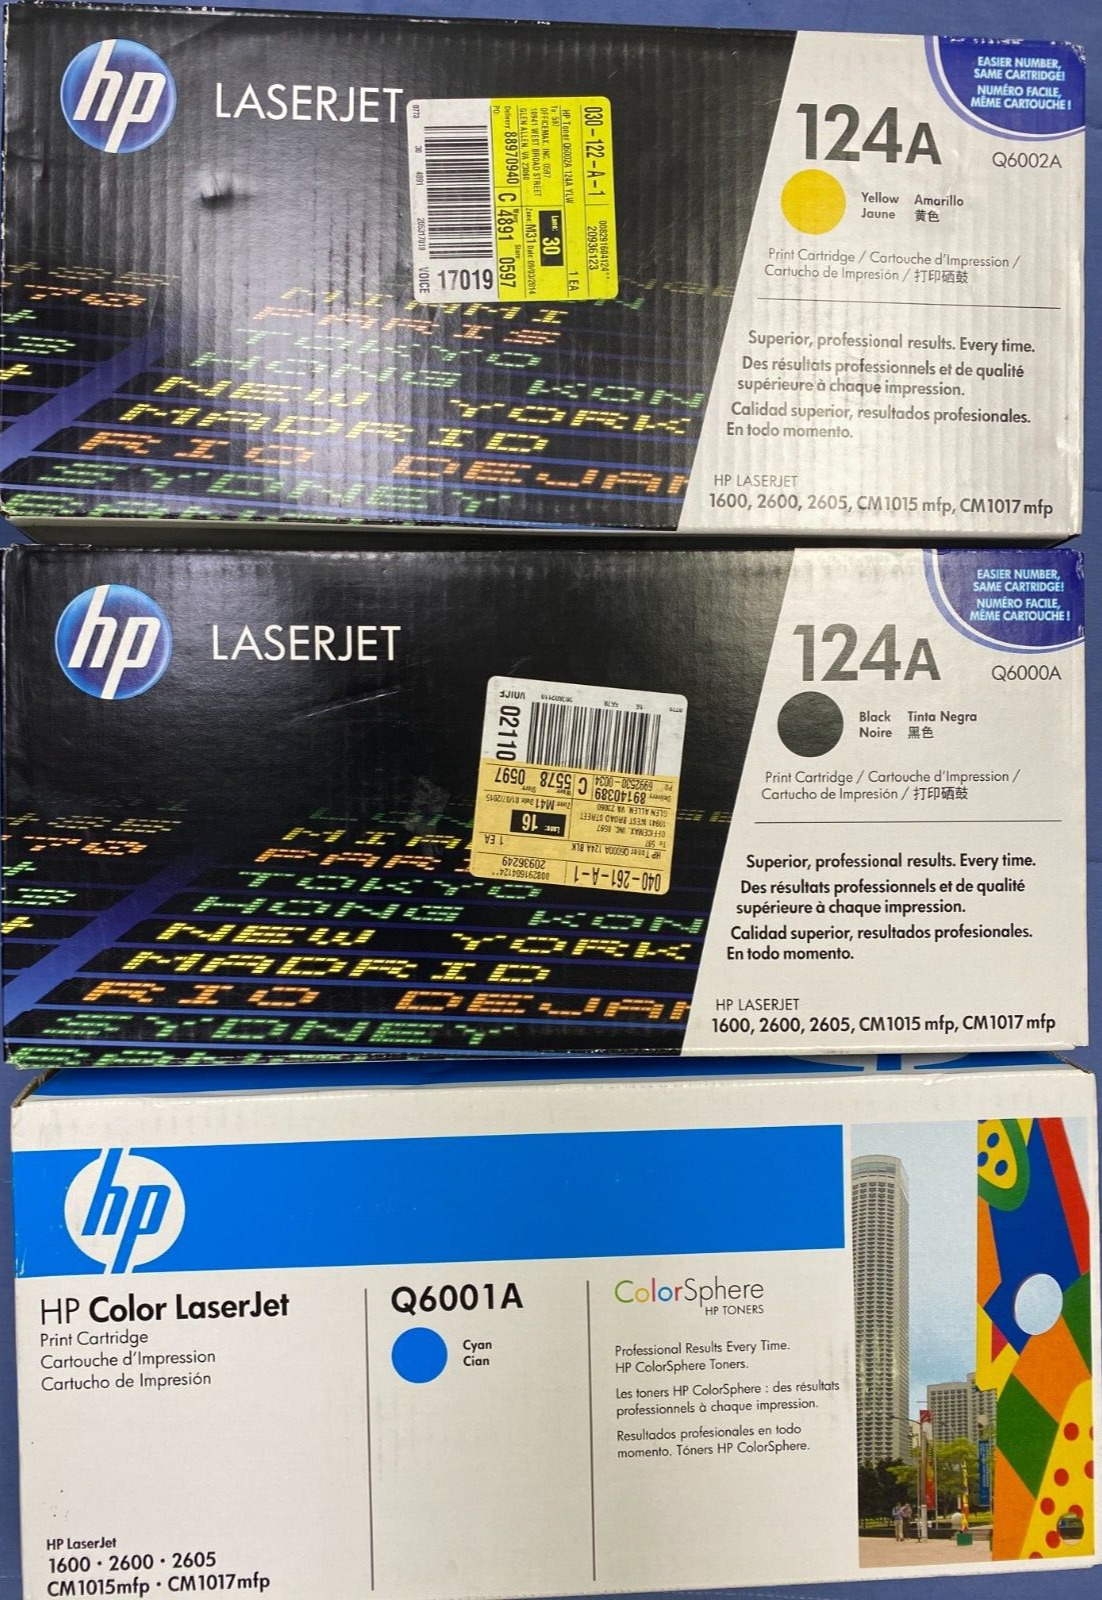 HP COLOR LASERJET PRINT CARTRIDGE LOT 3 Q6000A Q6001A Q6002A BLACK YELLOW CYAN